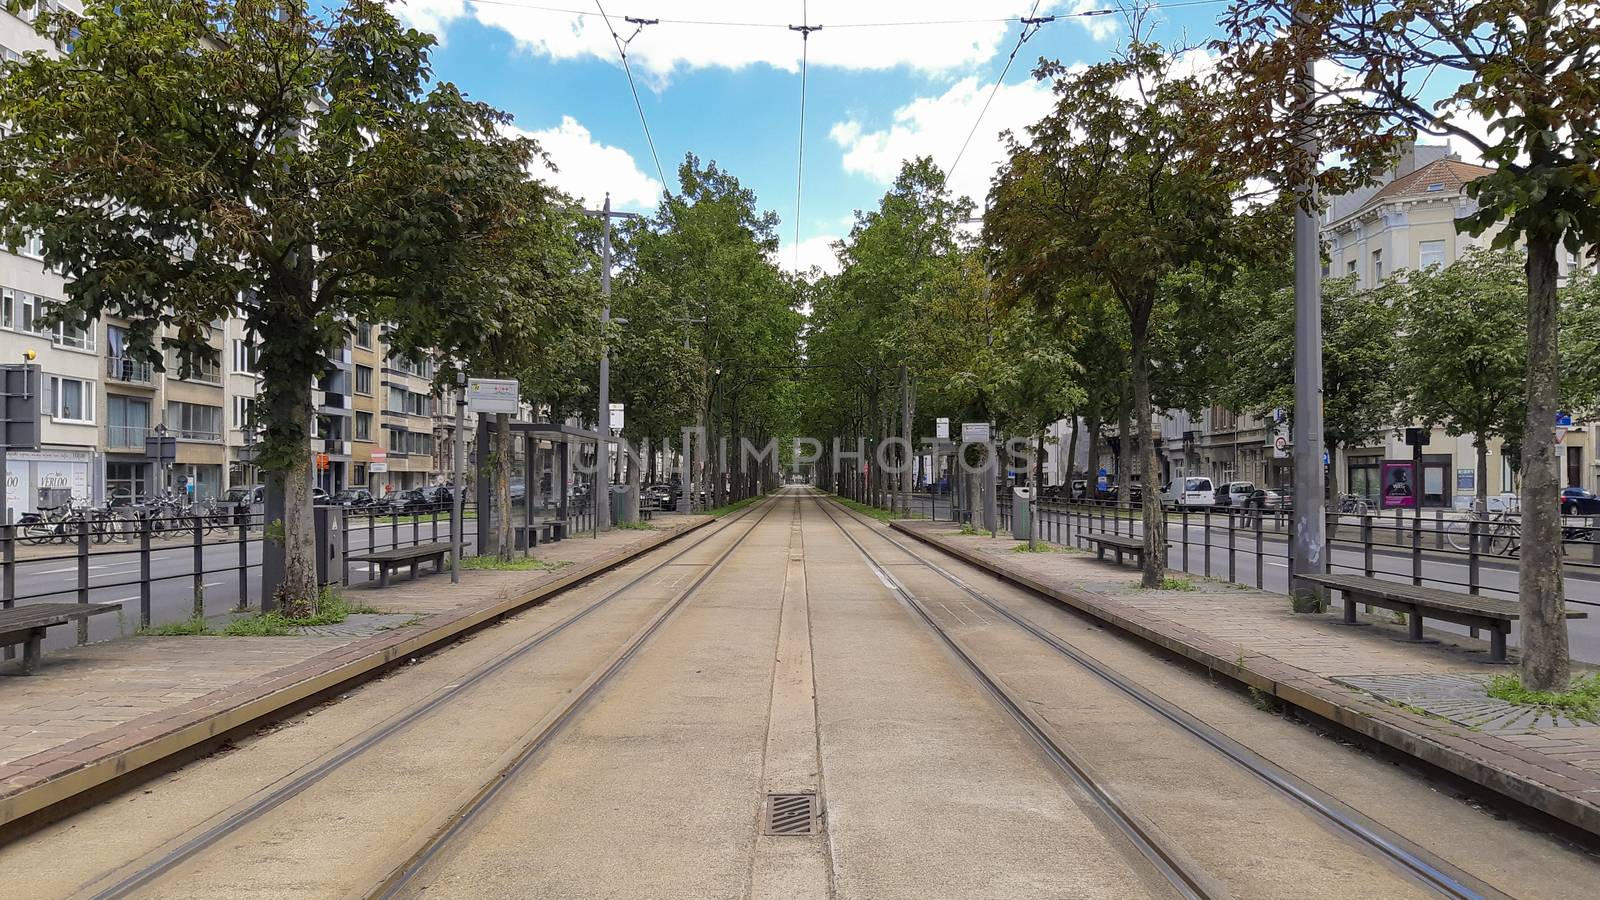 view on the tram tracks on De Leien in the city of Antwerp, Belgium by kb79